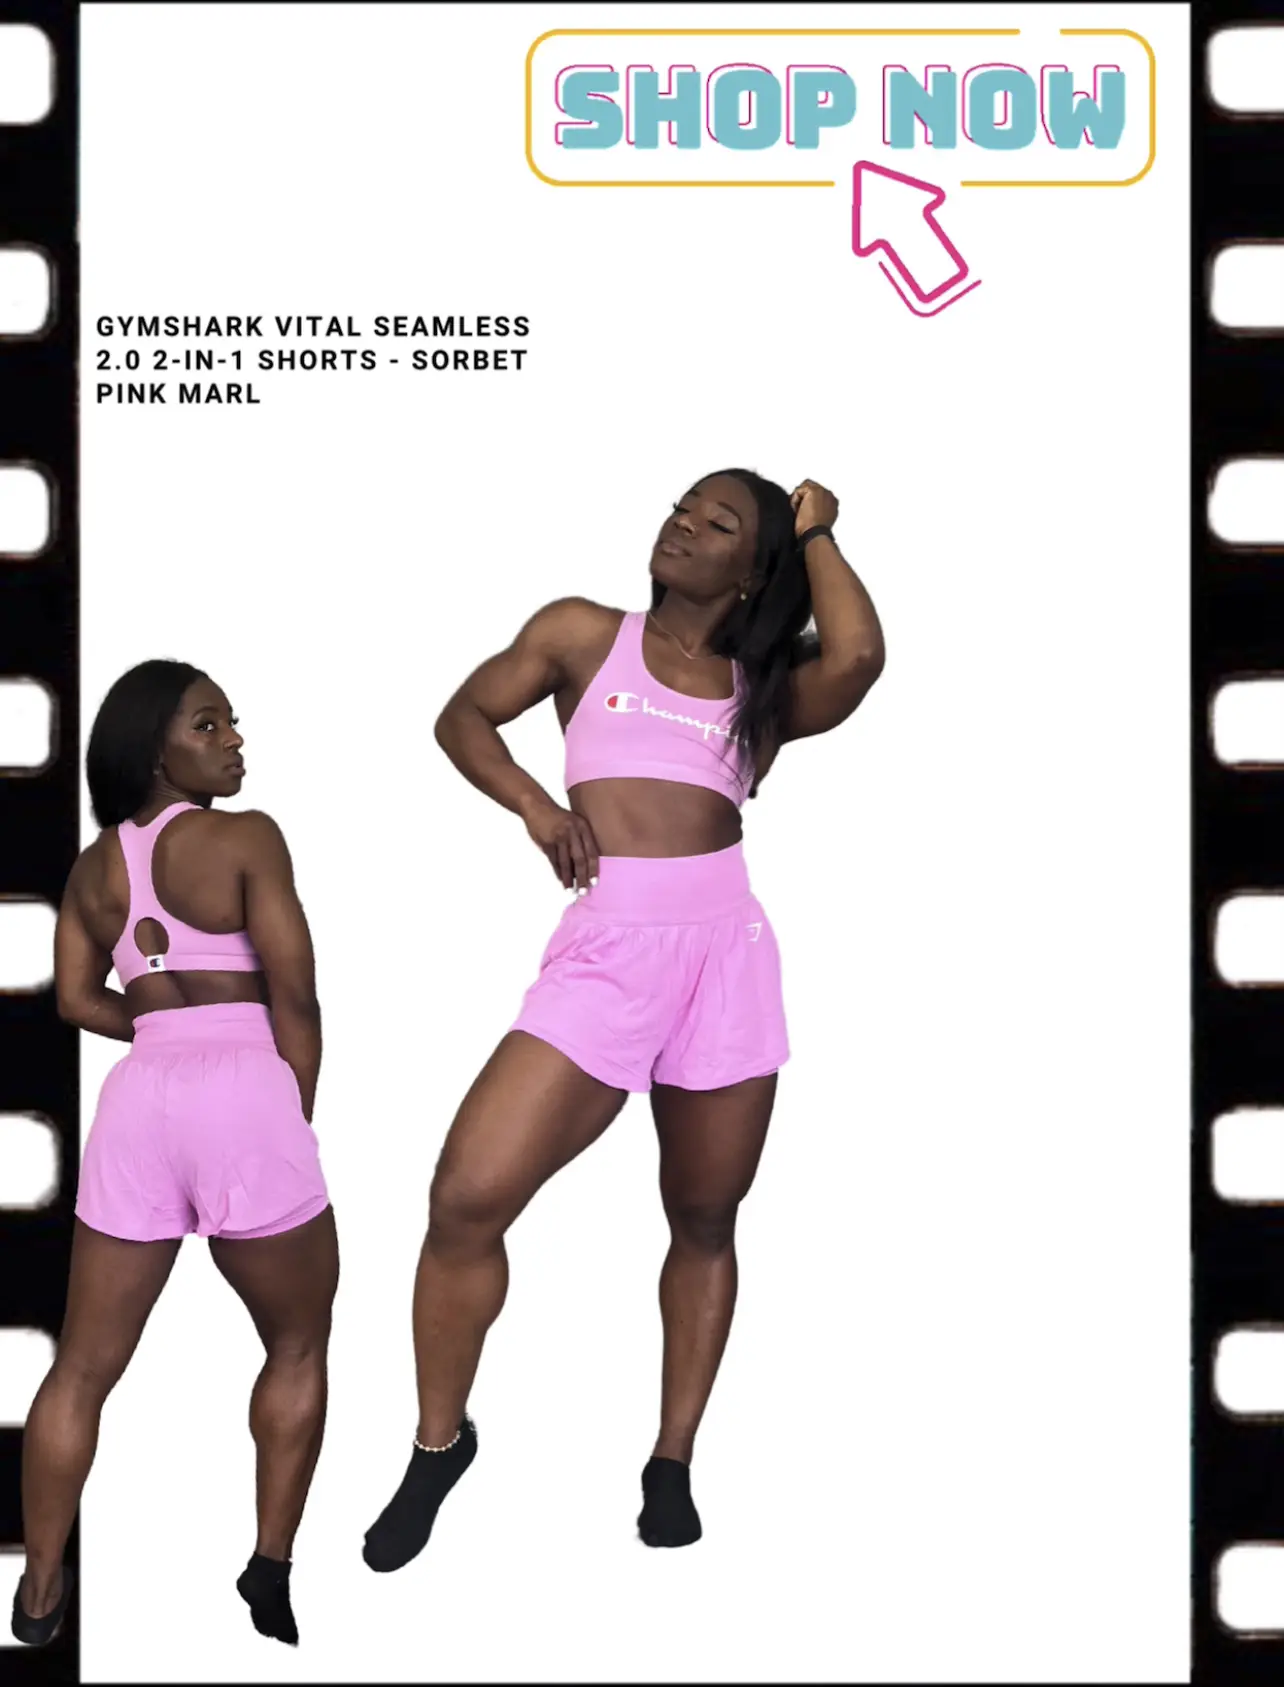 Gymshark Vital Seamless 2.0 Shorts - Sorbet Pink Marl